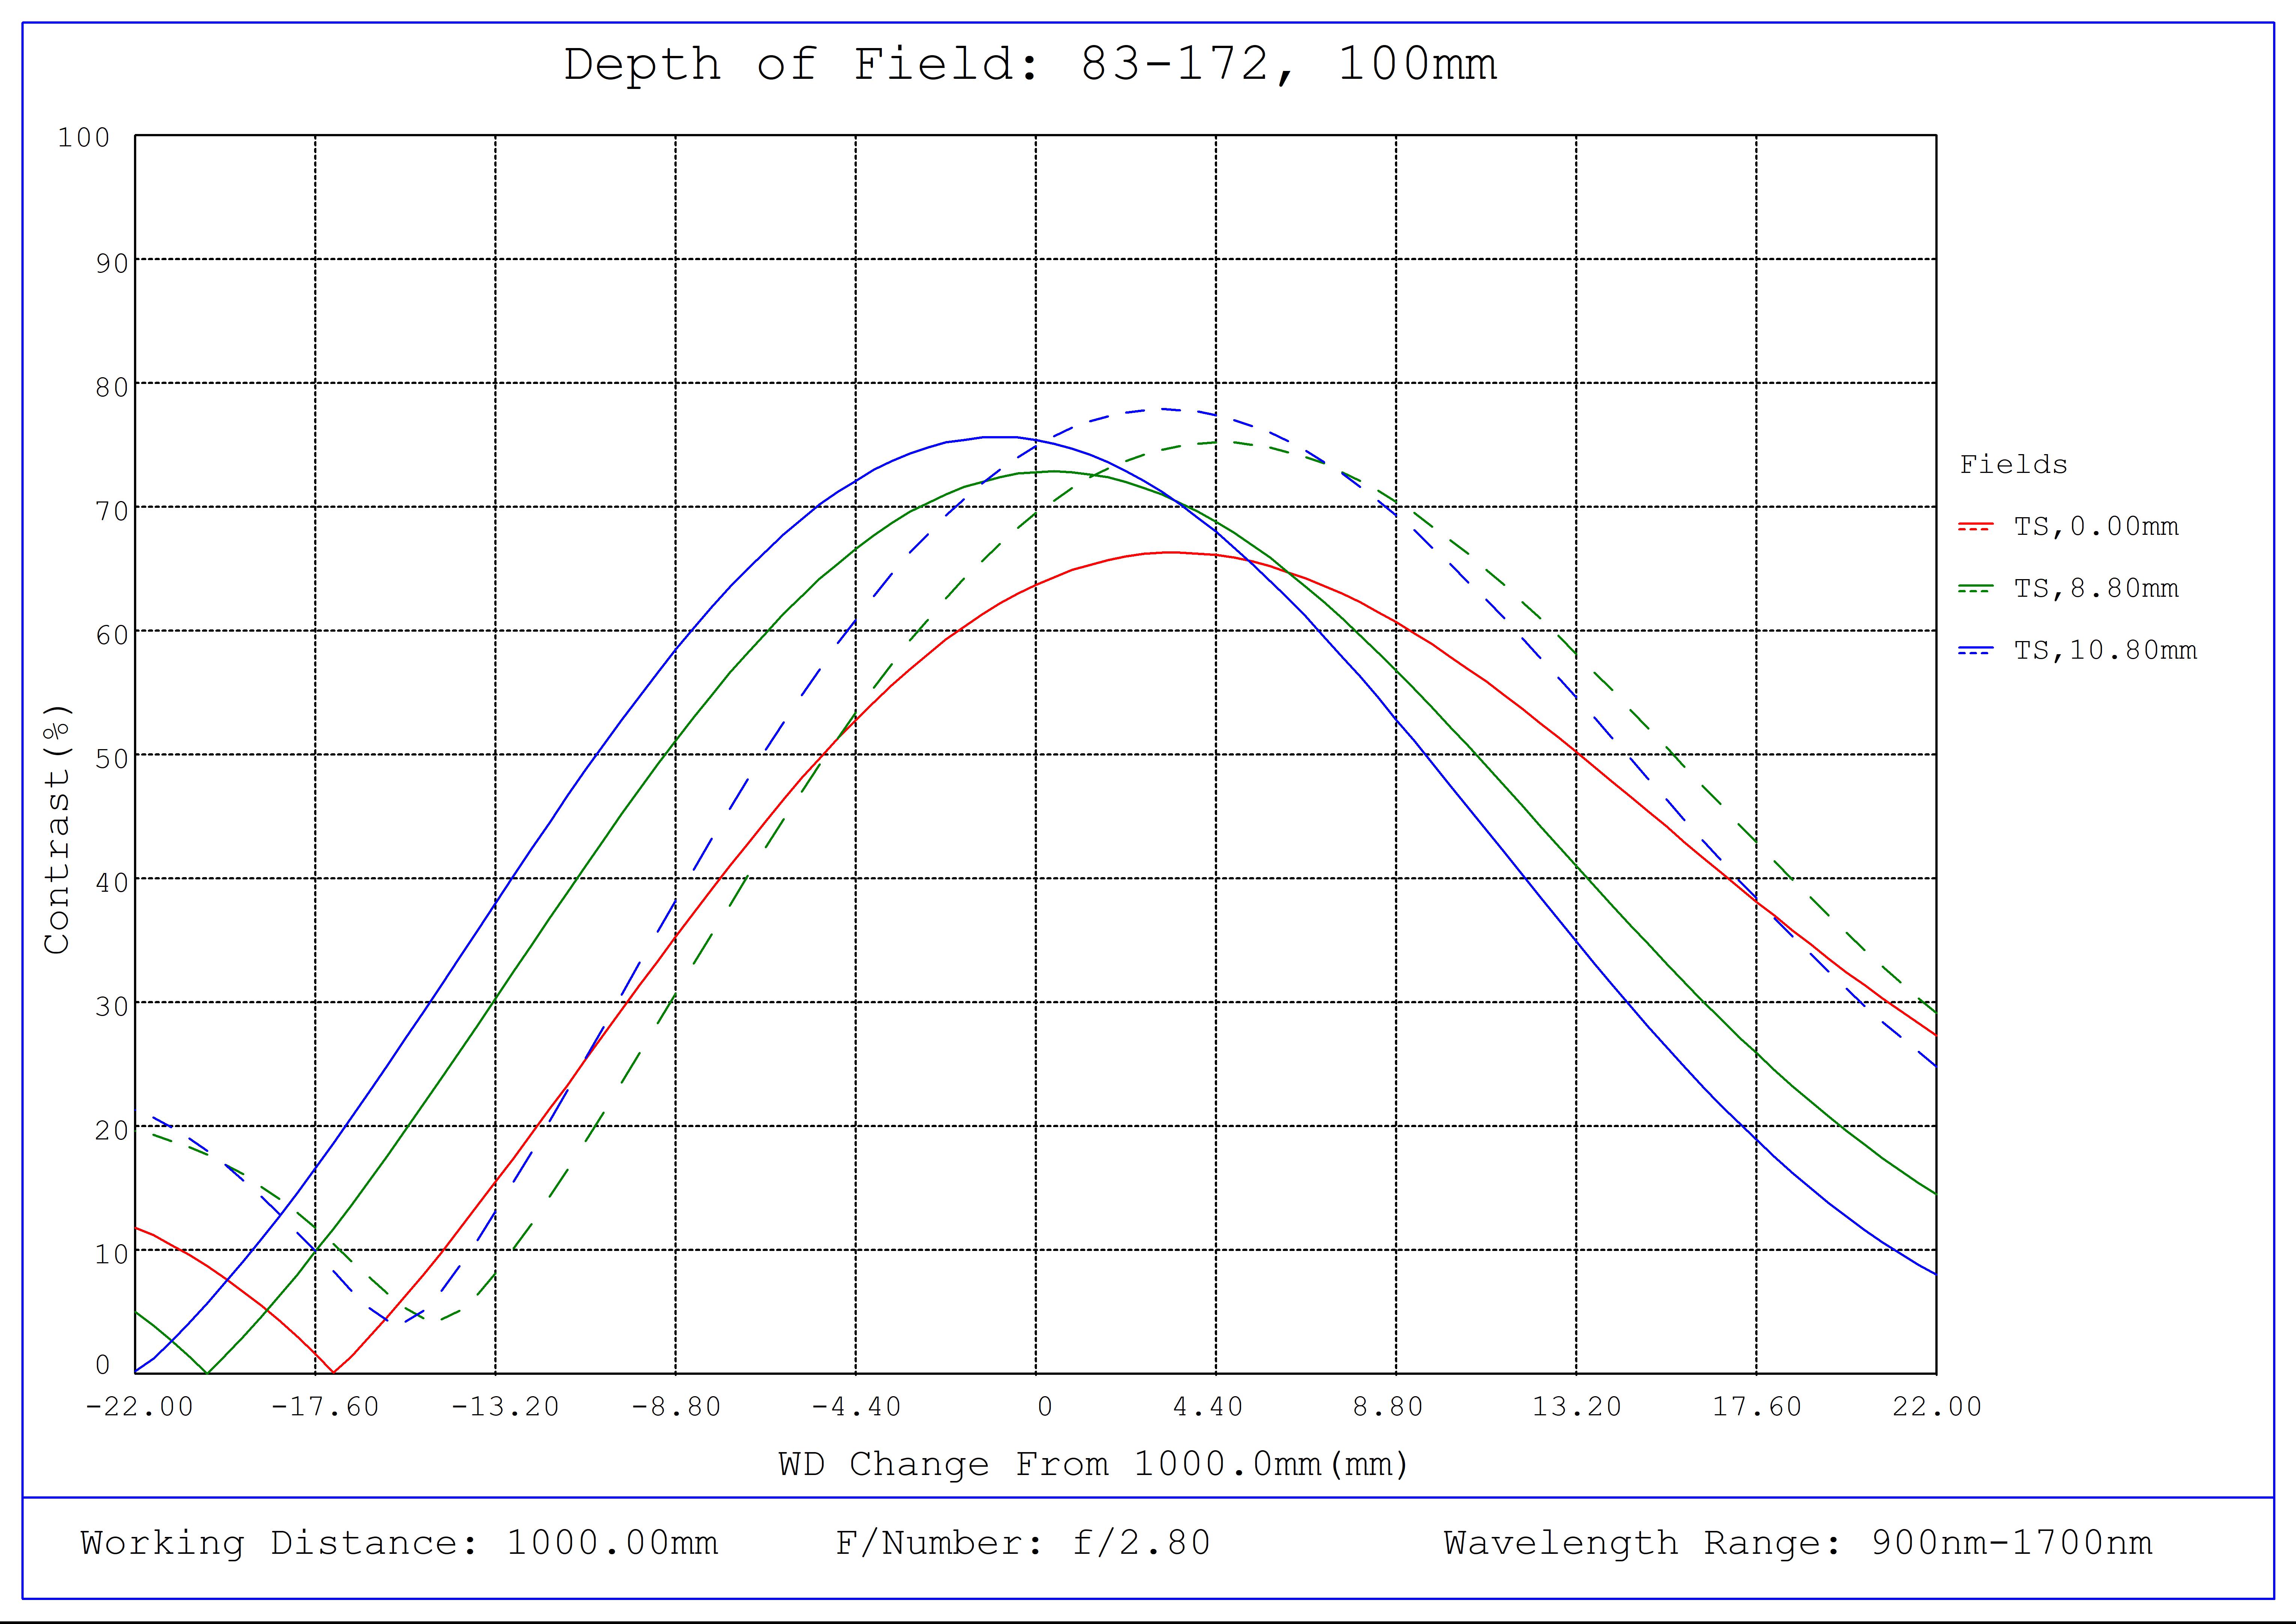 #83-172, 100mm SWIR Series Fixed Focal Length Lens, M42 x 1.0, Depth of Field Plot, 1000mm Working Distance, f2.8